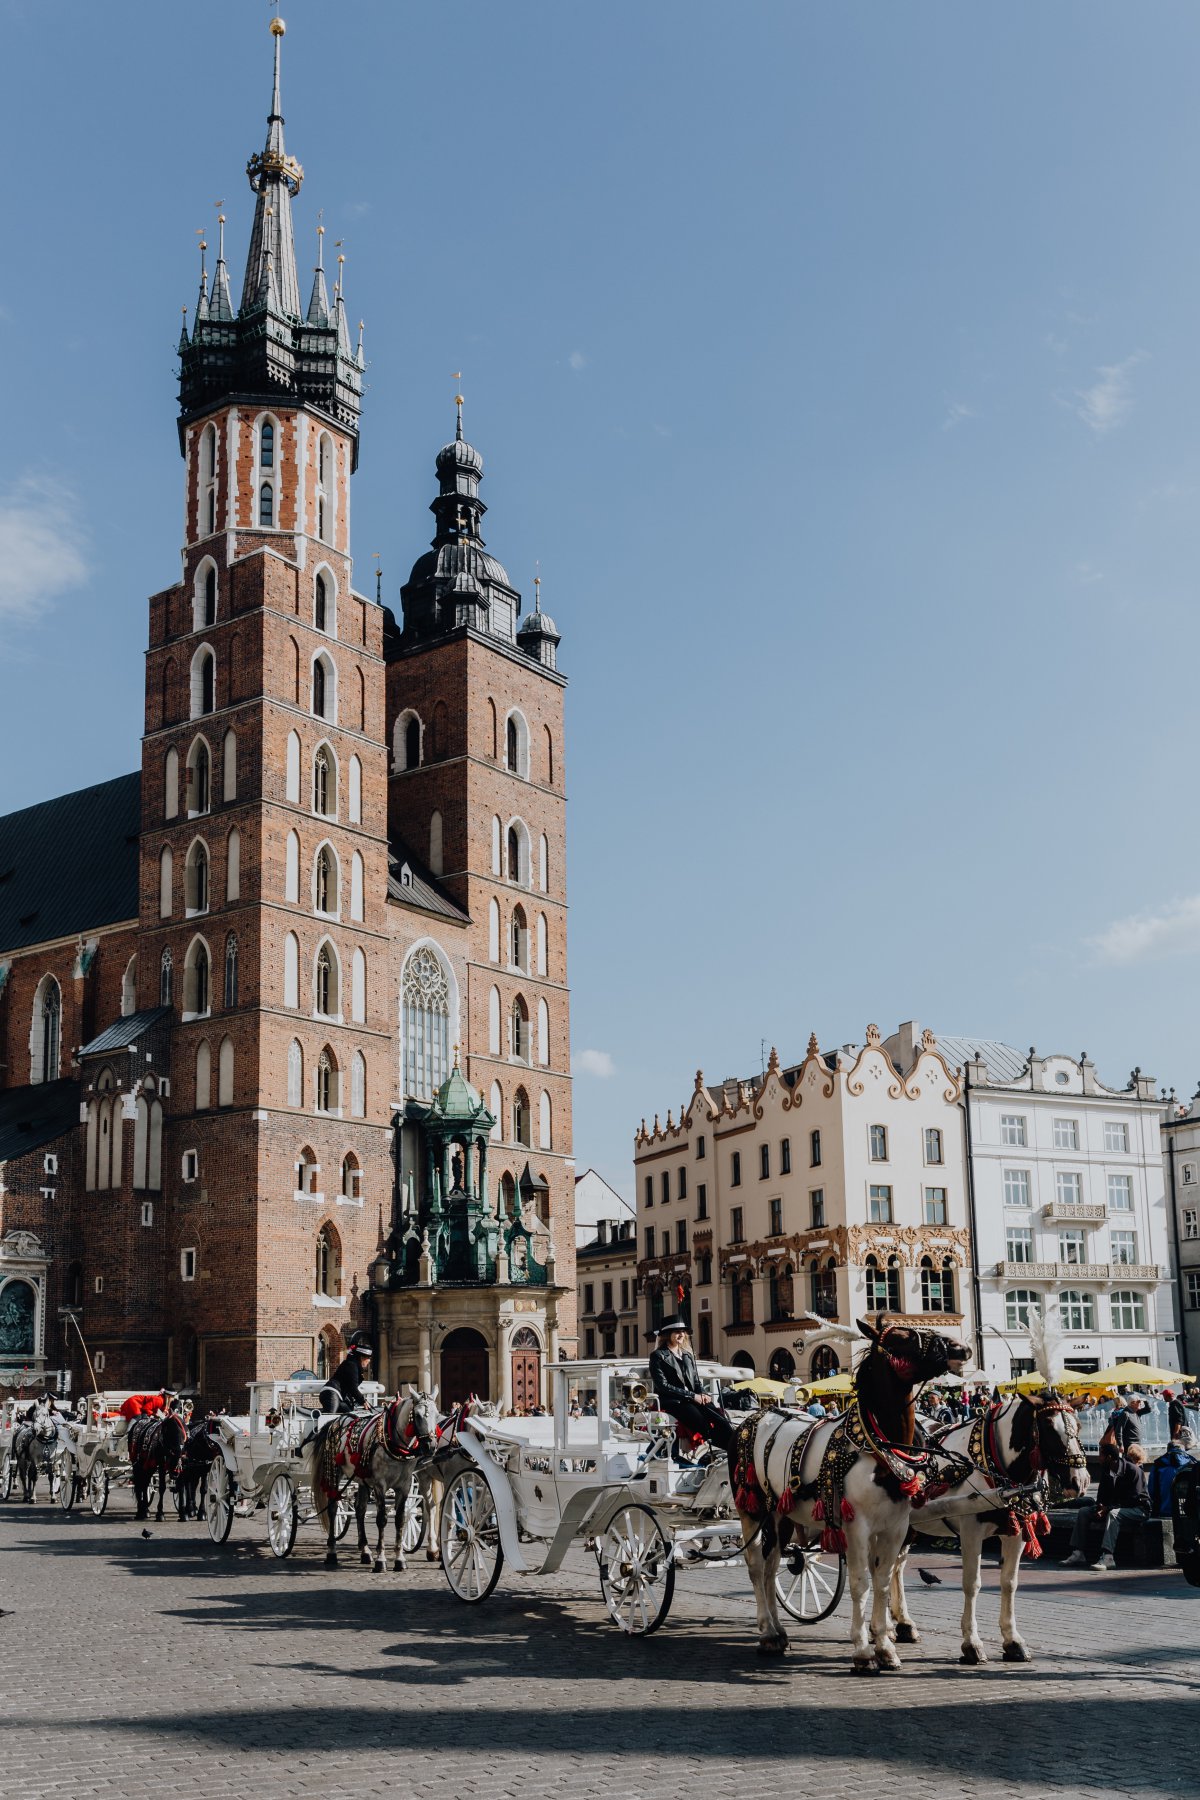 Pictures of Krakow, Poland